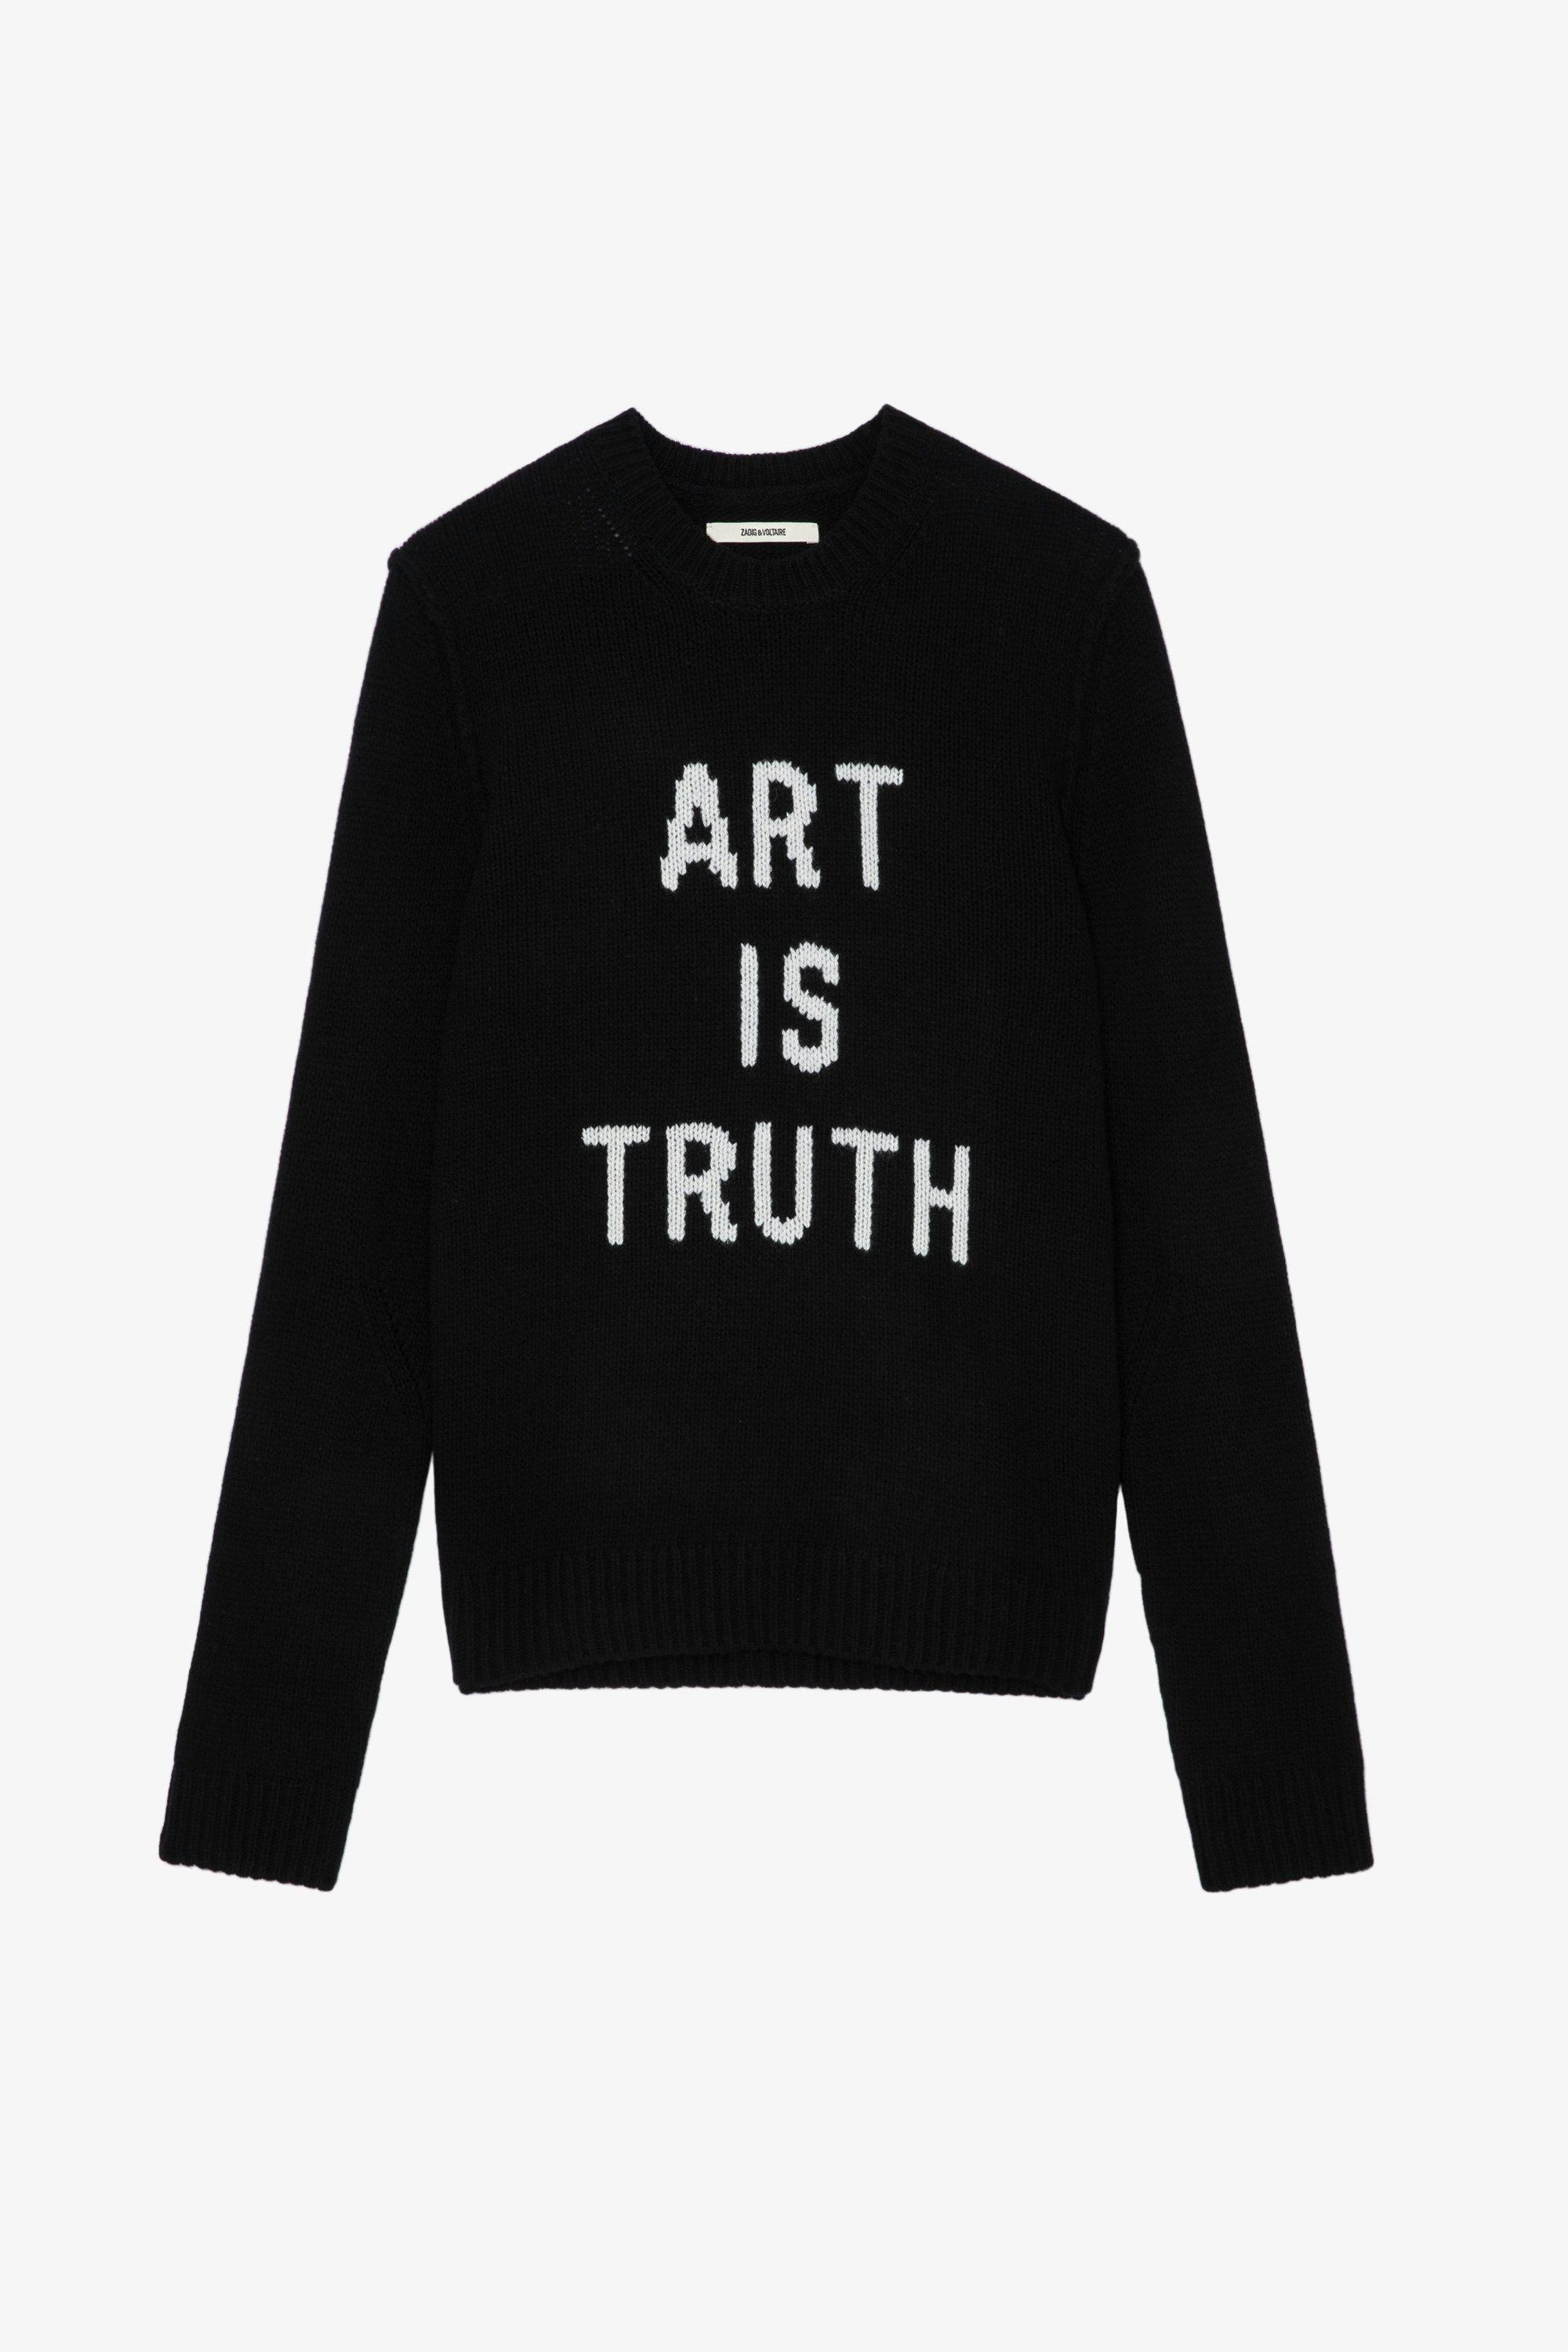 Art is Truth Kennedy ニット Men’s merino wool ‘Art is truth’ jumper